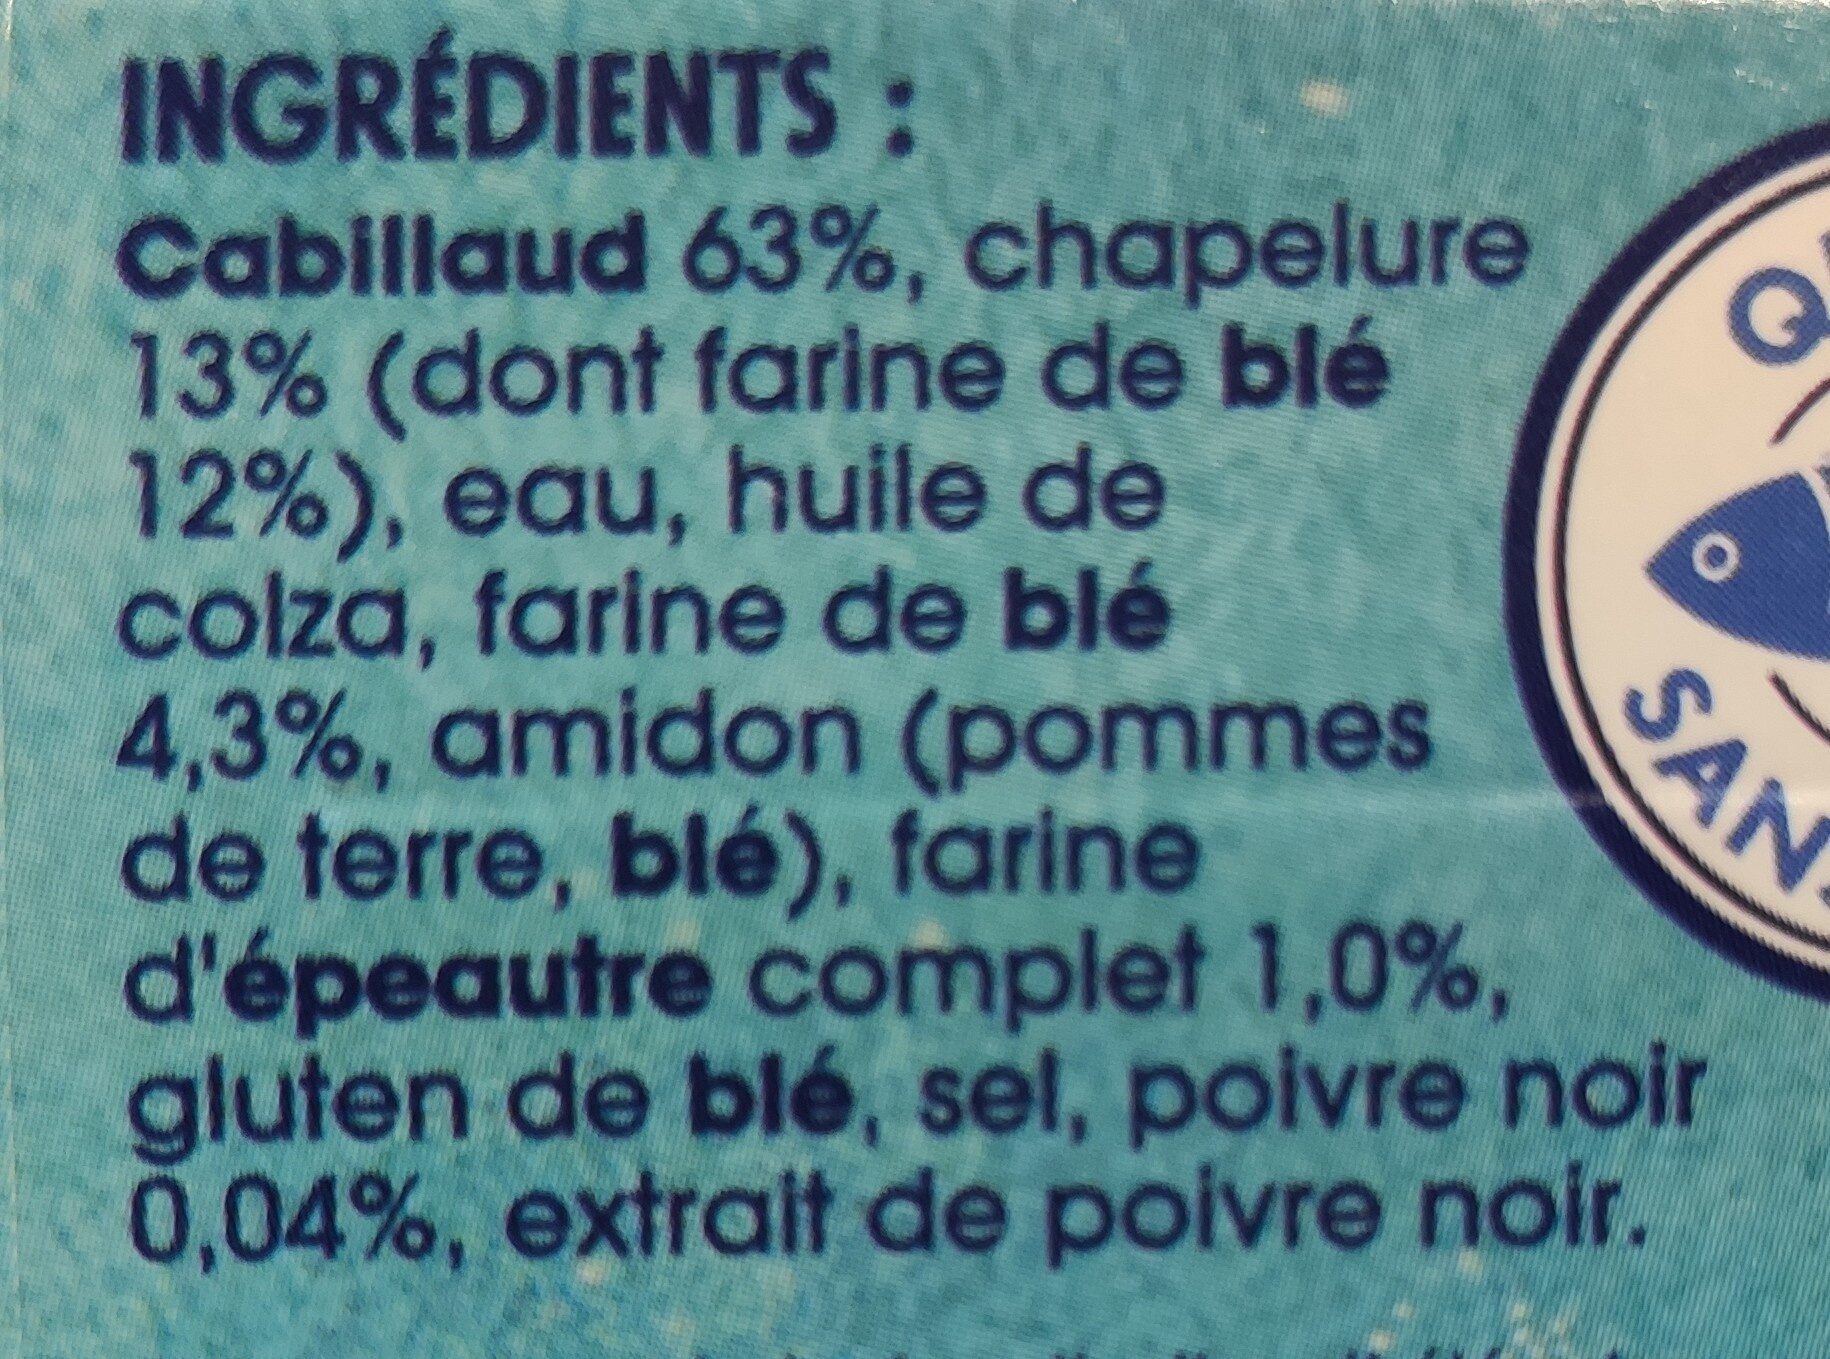 Tranches panées de Cabillaud MSC - Ingredienti - fr